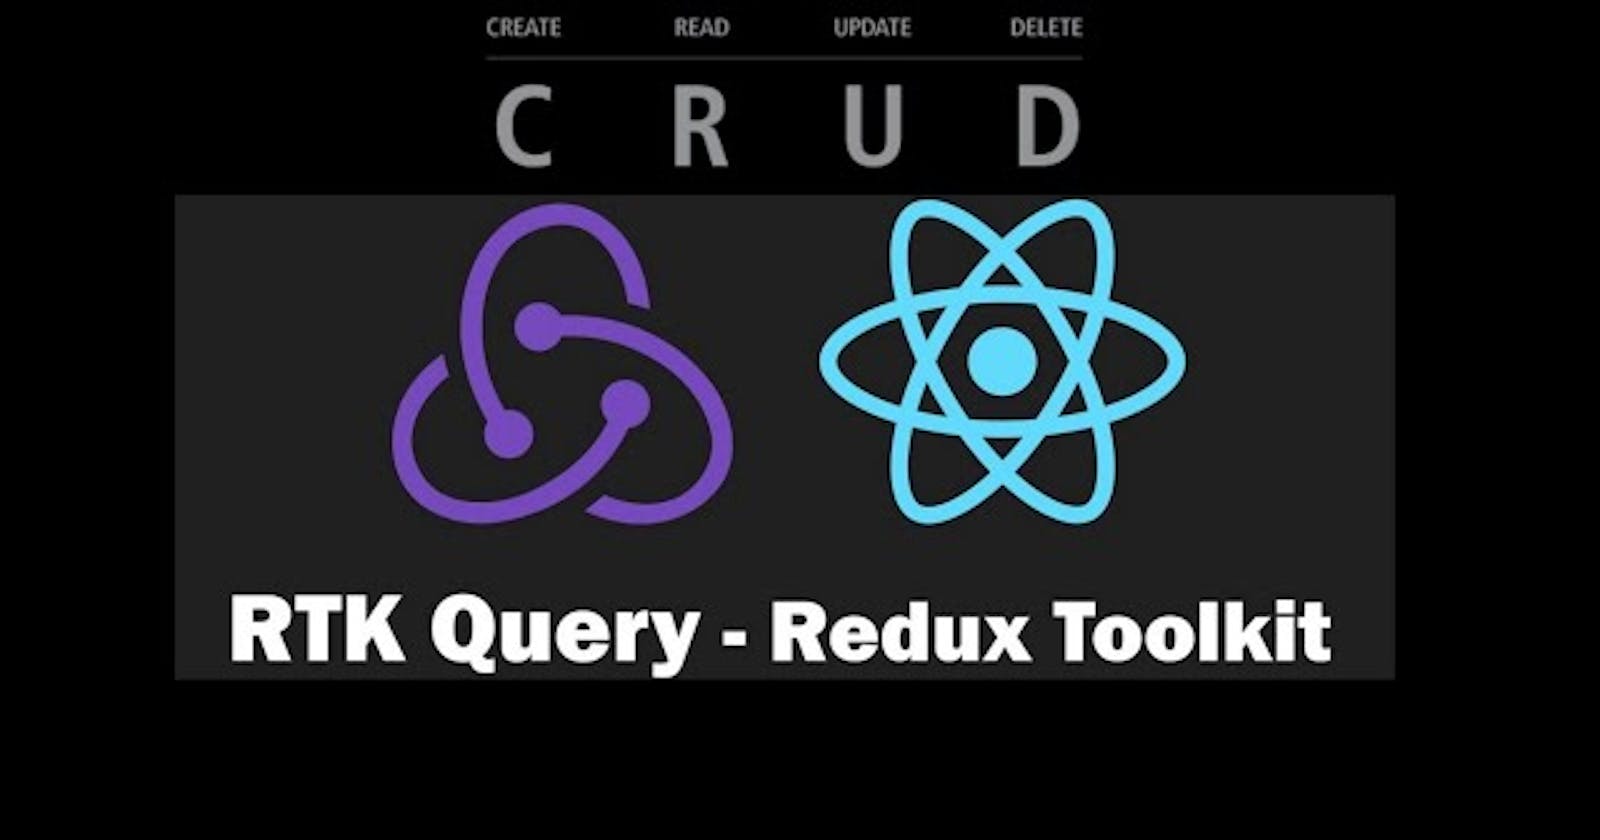 crud operation through Redux toolkit